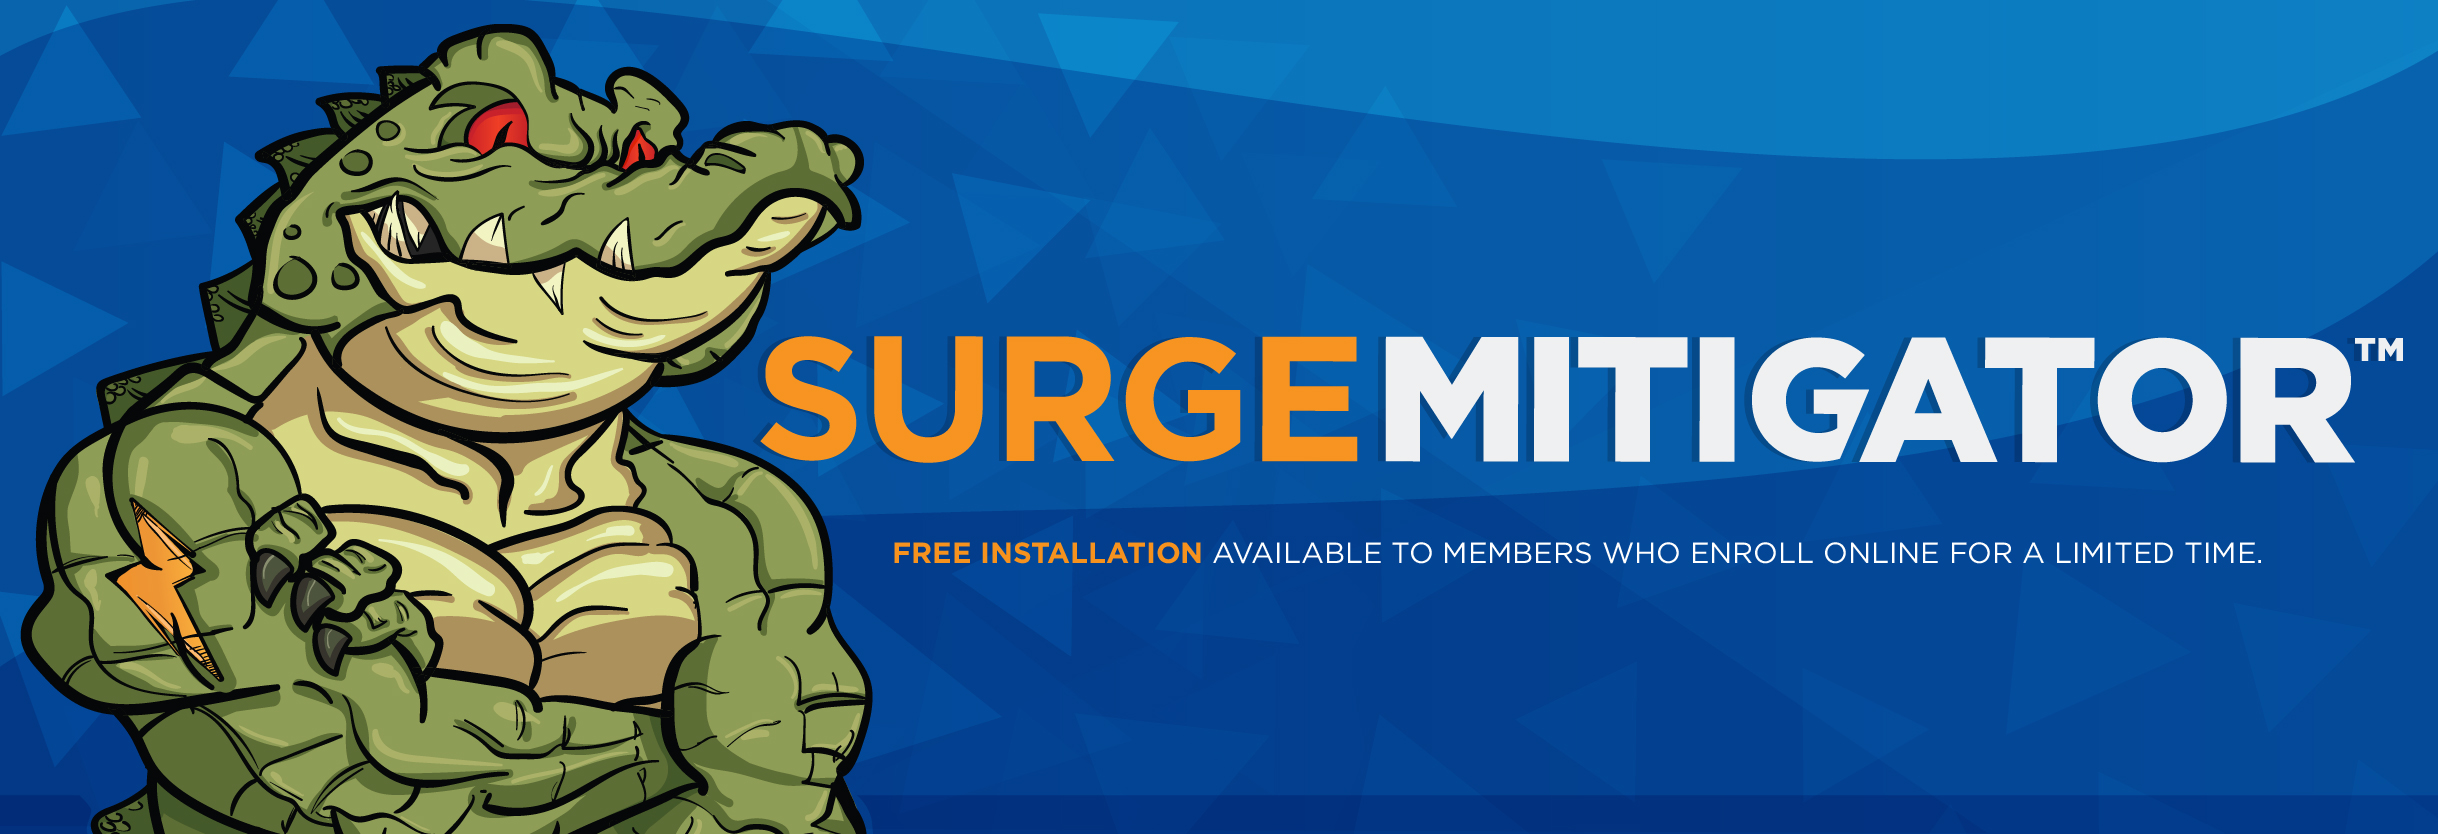 Surge MitiGator free installation July 2019 SECO News